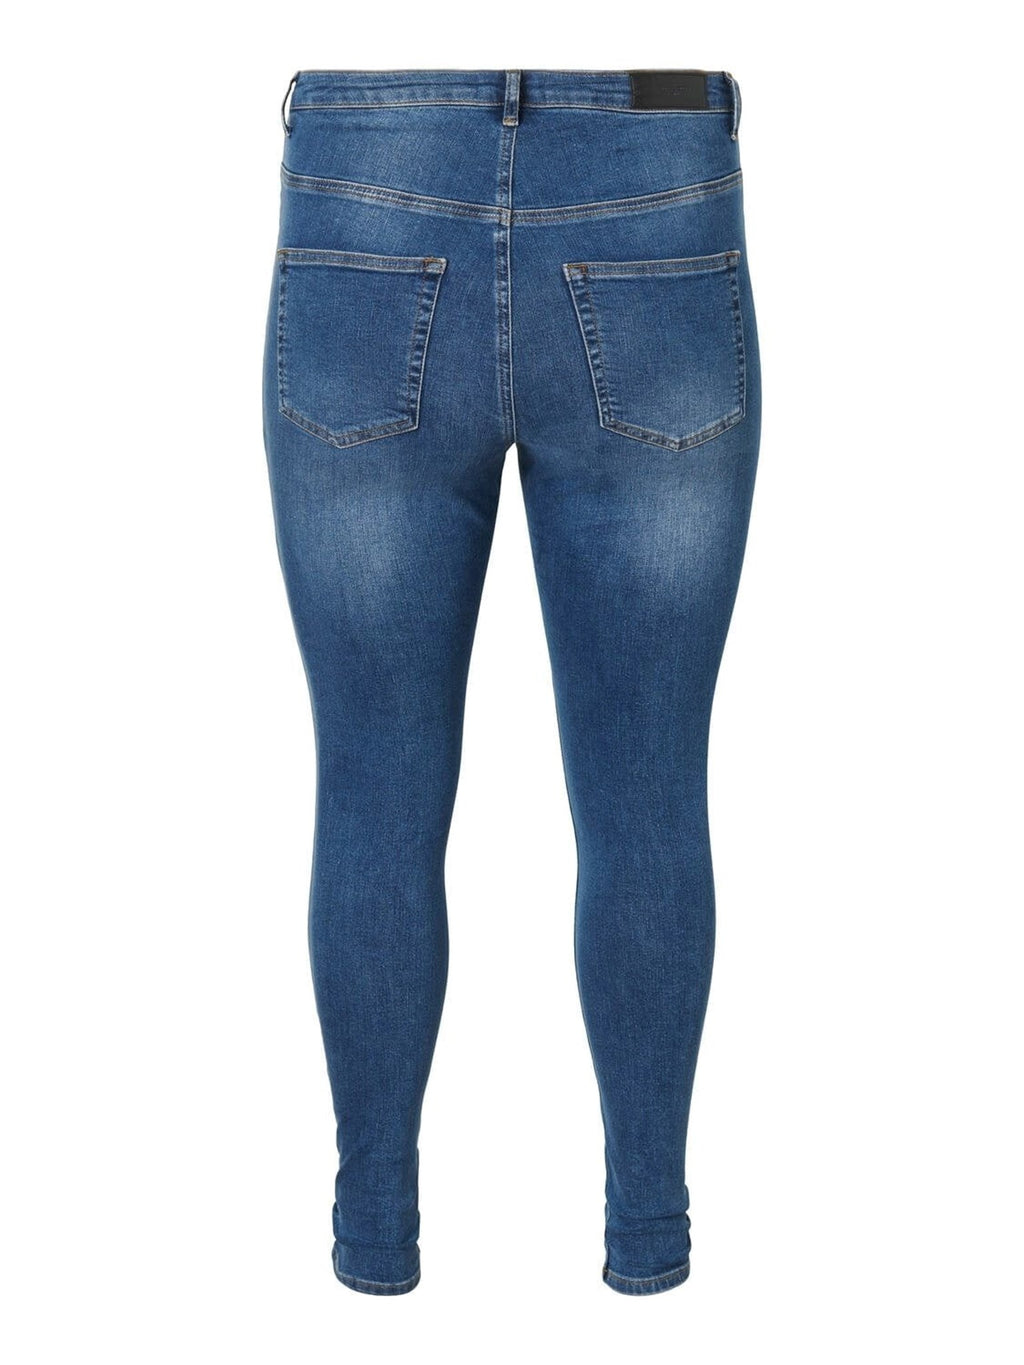 Lora Jeans high-waisted (Curve) - Medium blue denim